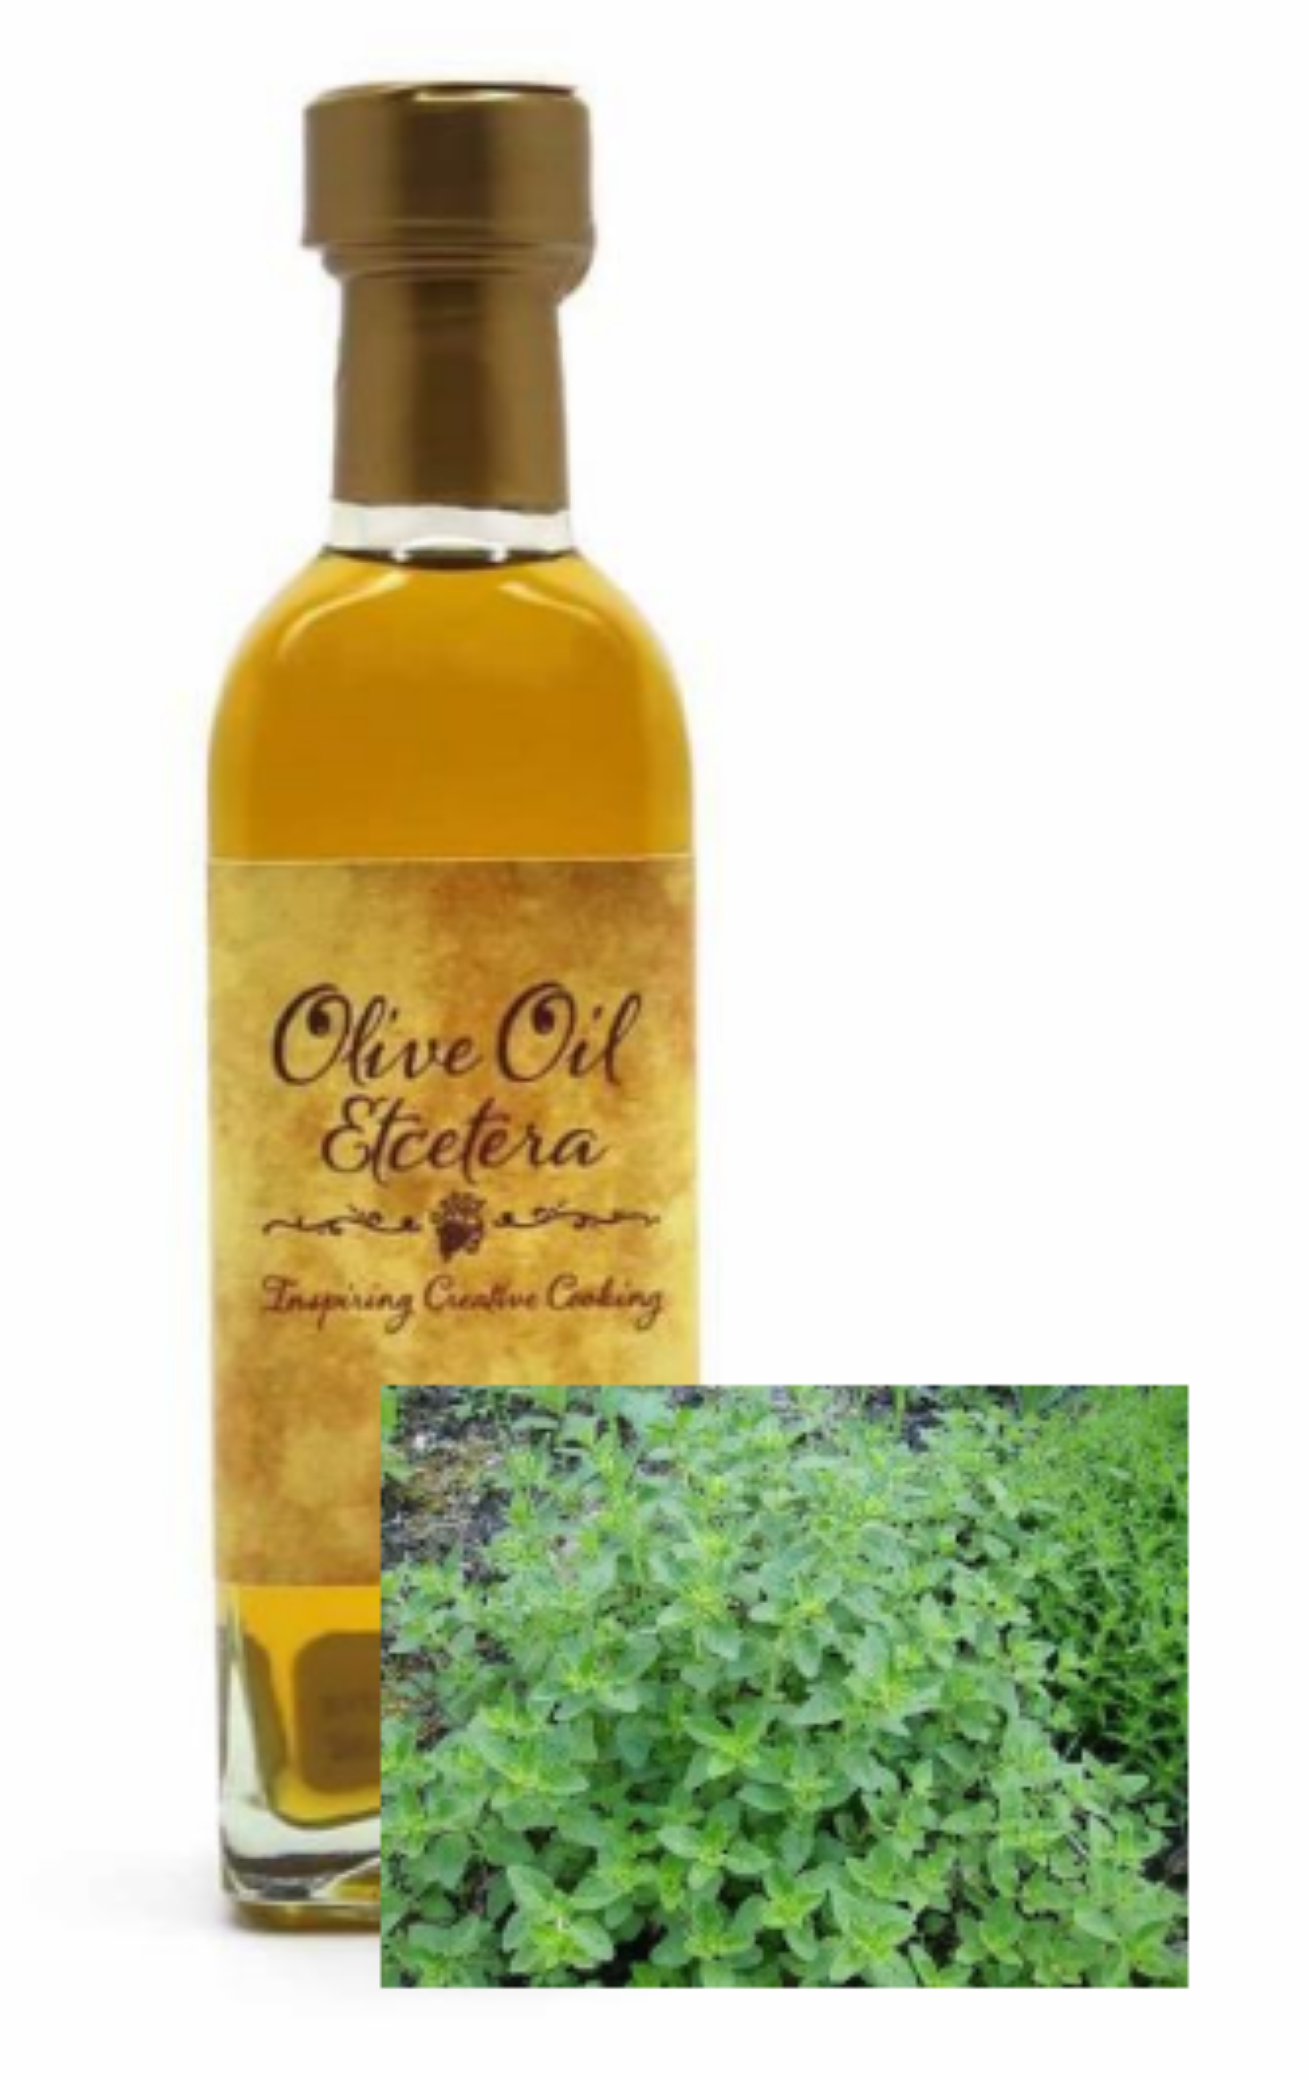 Oregano Olive Oil - Olive Oil Etcetera 